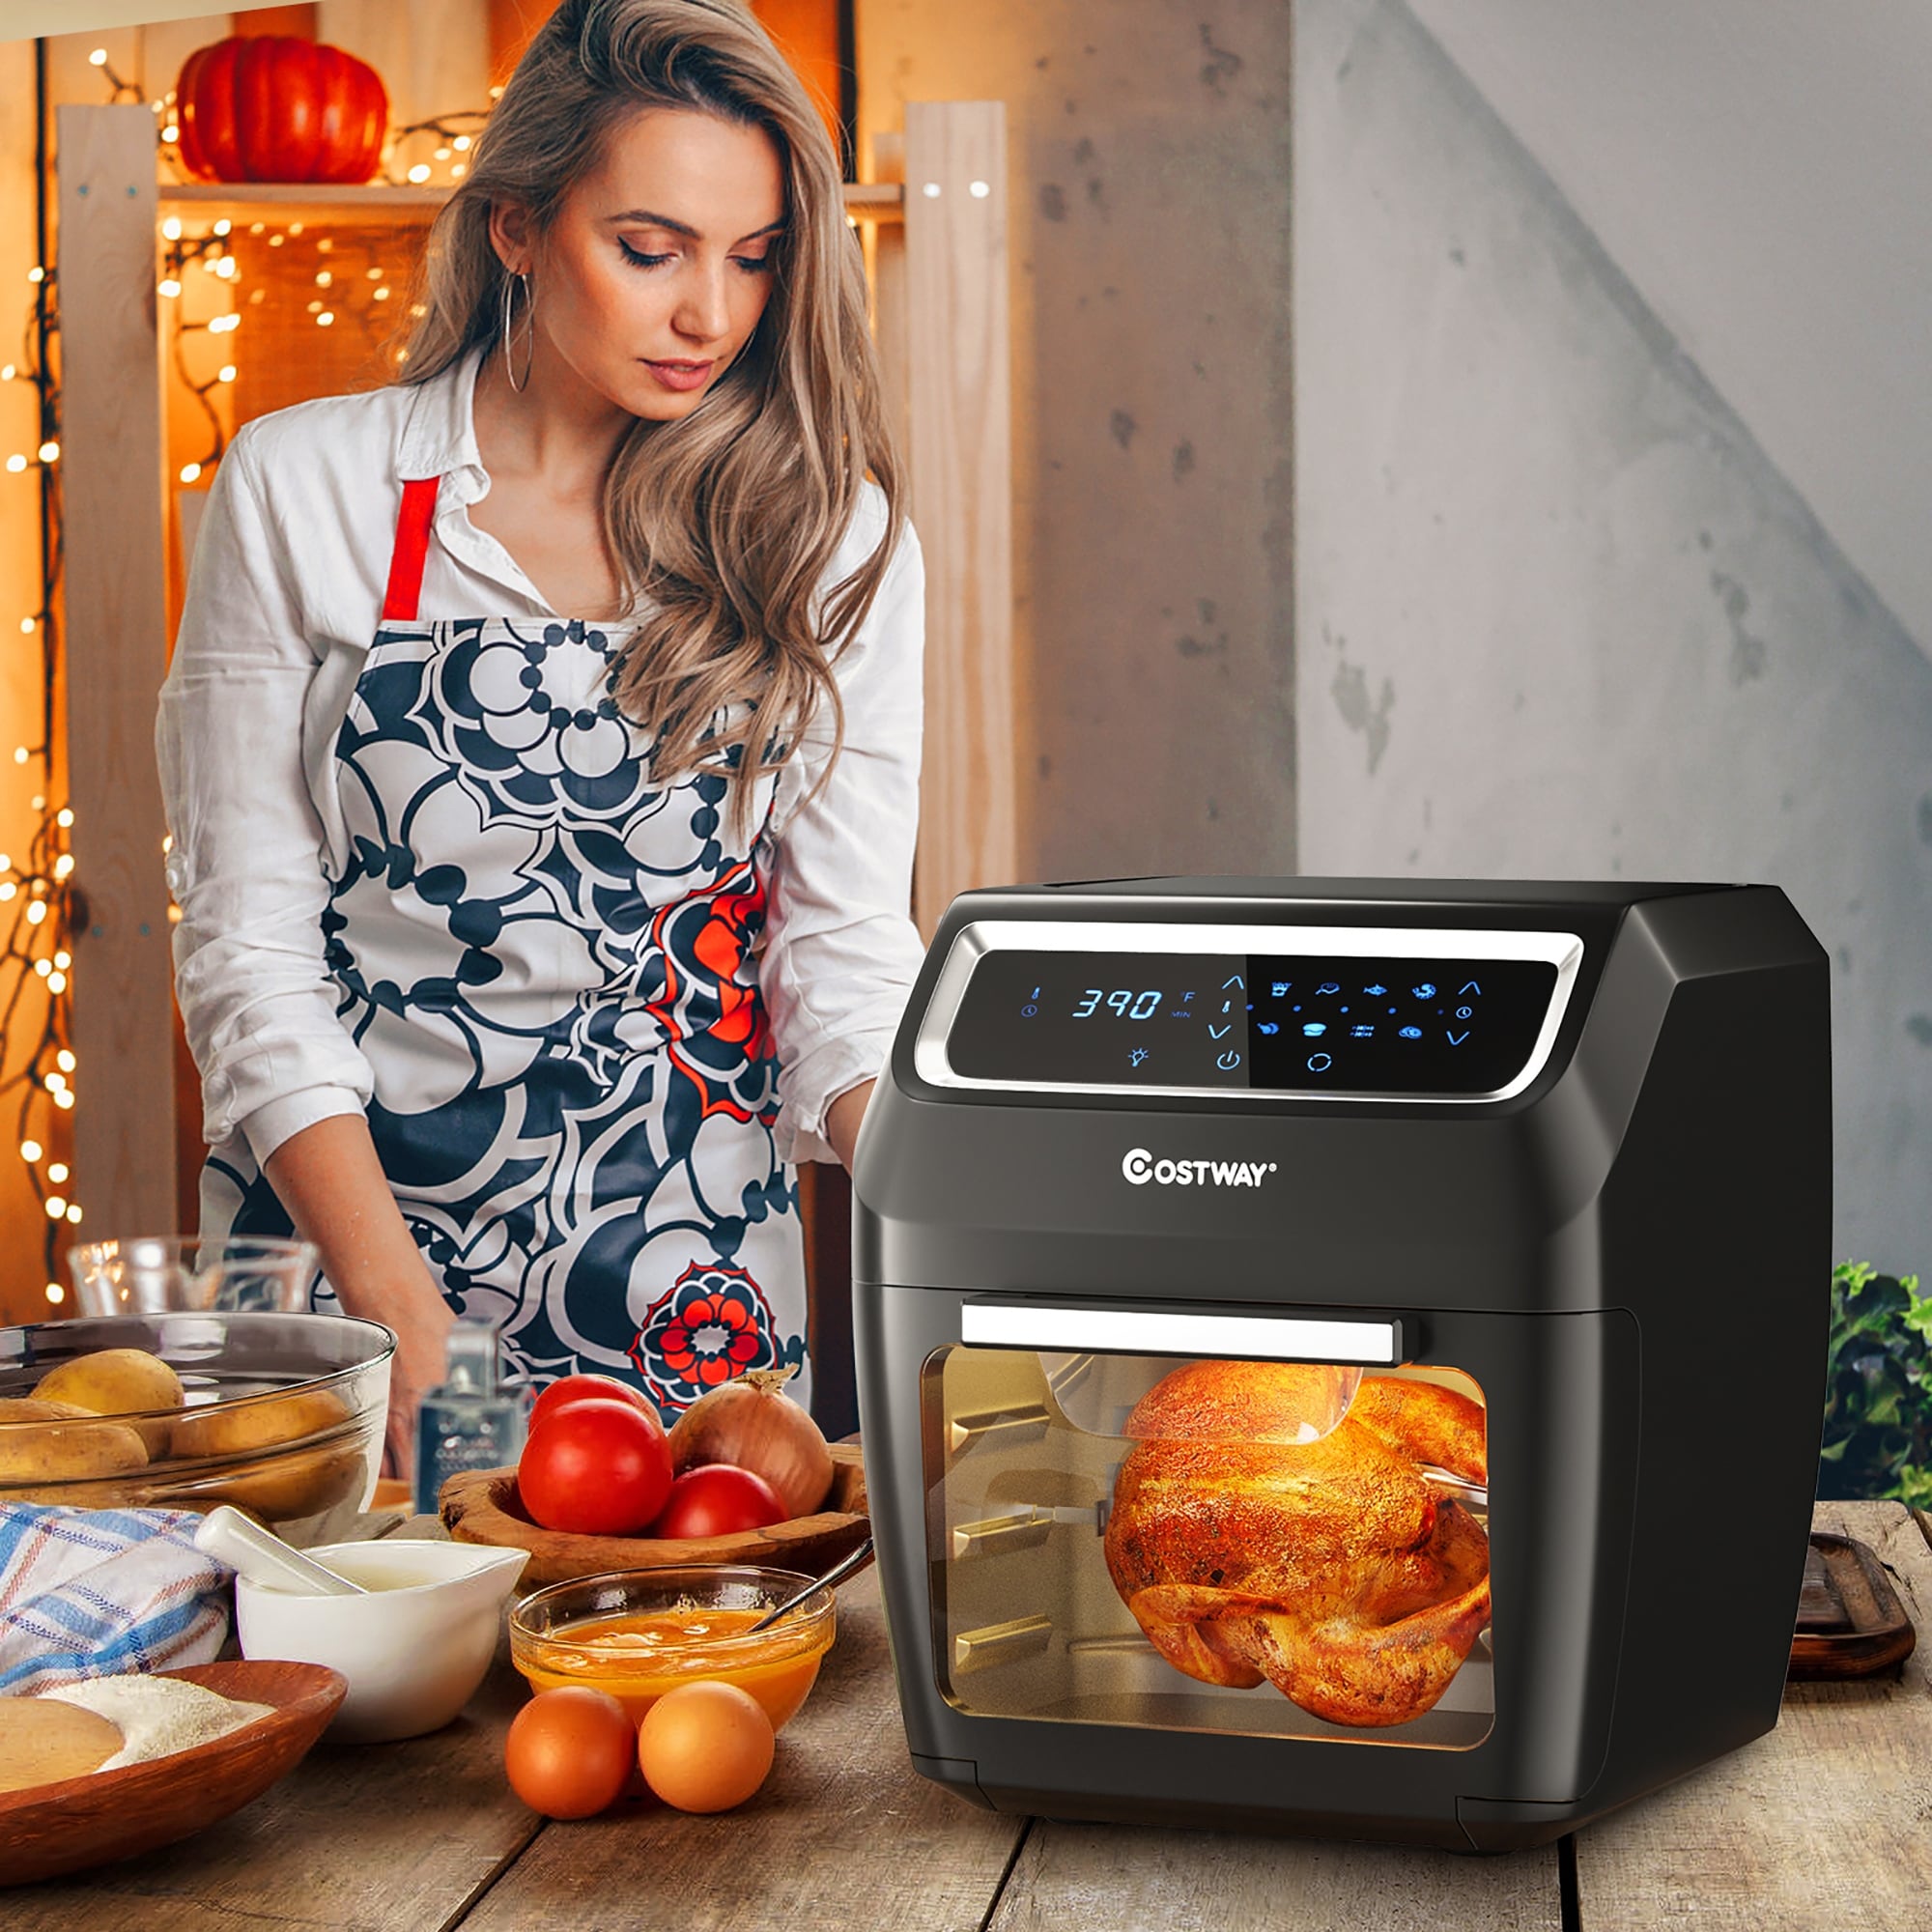 NutriCook Air Fryer Oven 1800W 12L - Kitchen Appliances - Electronics